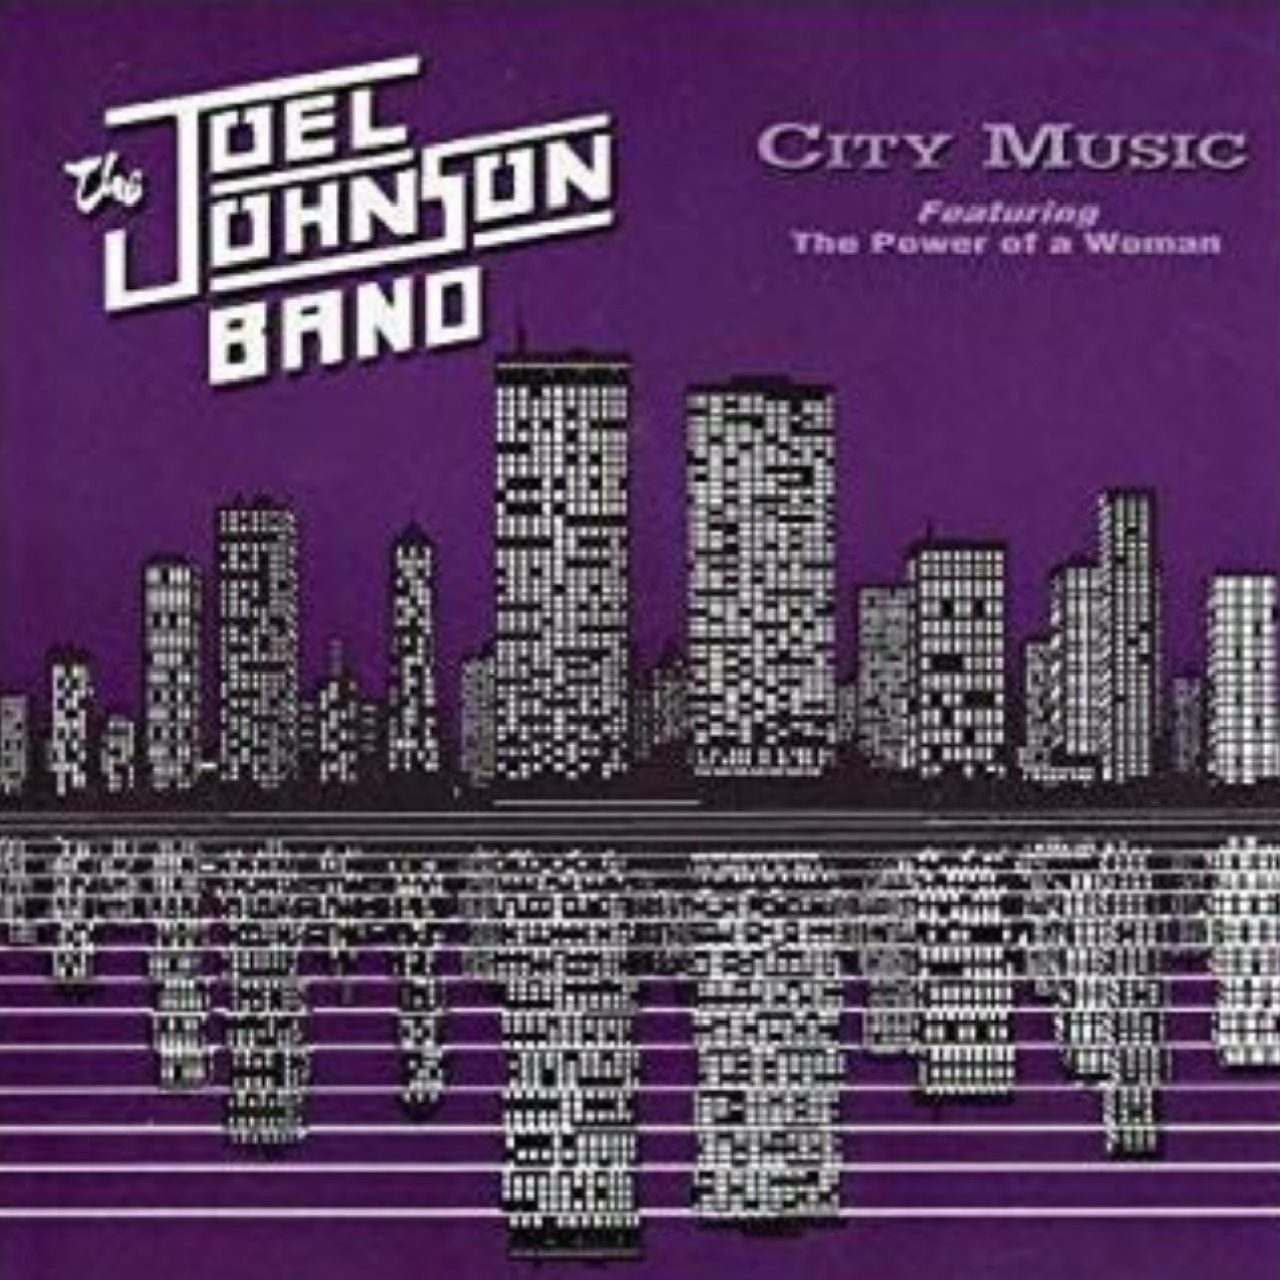 Joel Johnson Band – City Music cover album